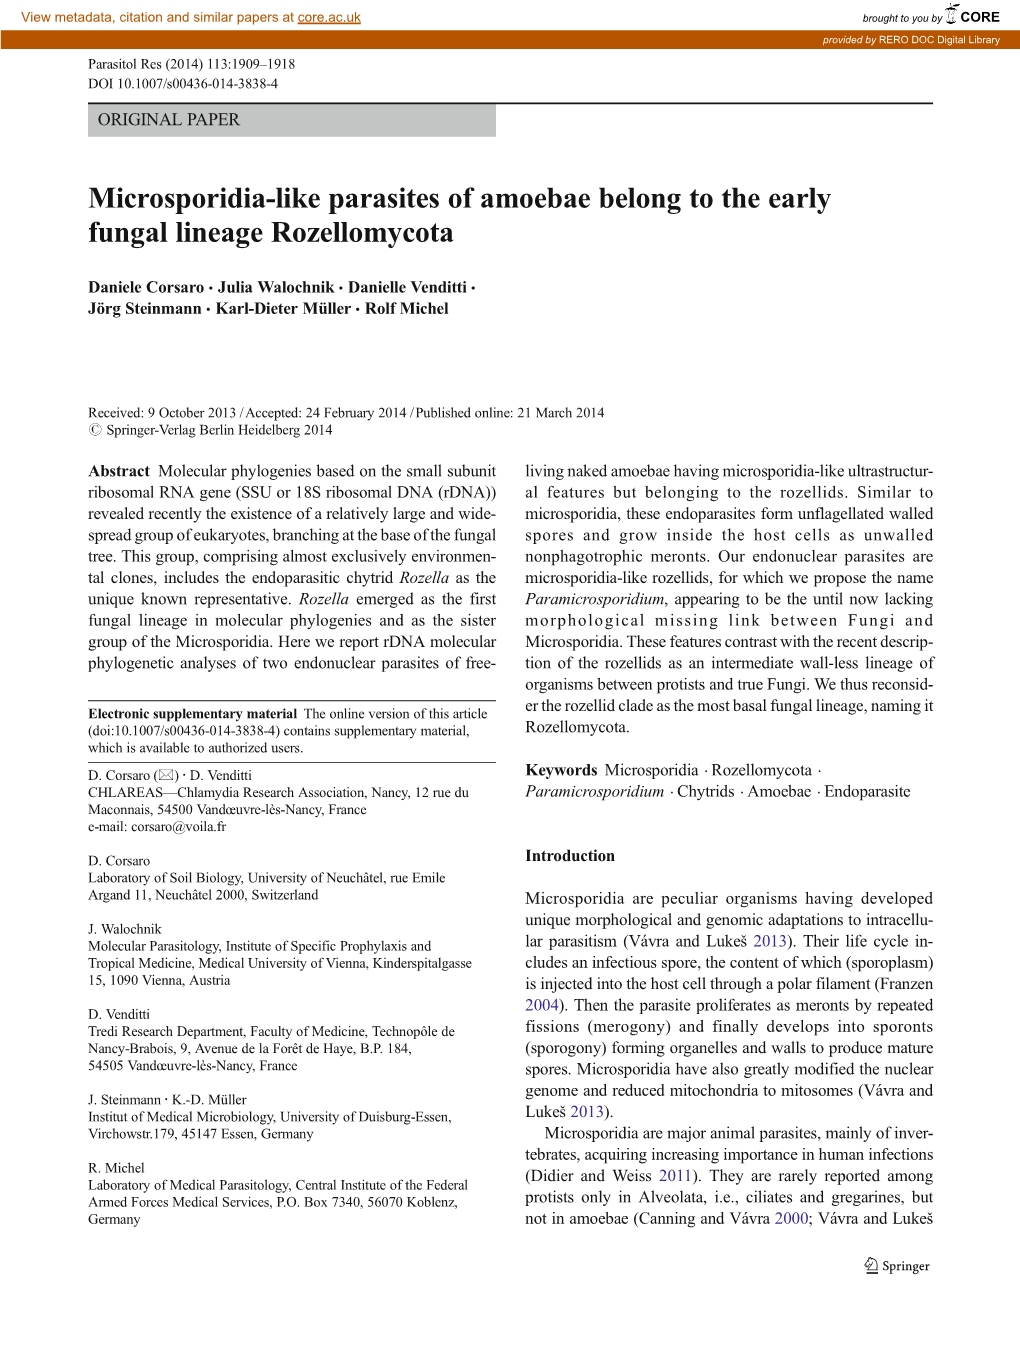 Microsporidia-Like Parasites of Amoebae Belong to the Early Fungal Lineage Rozellomycota